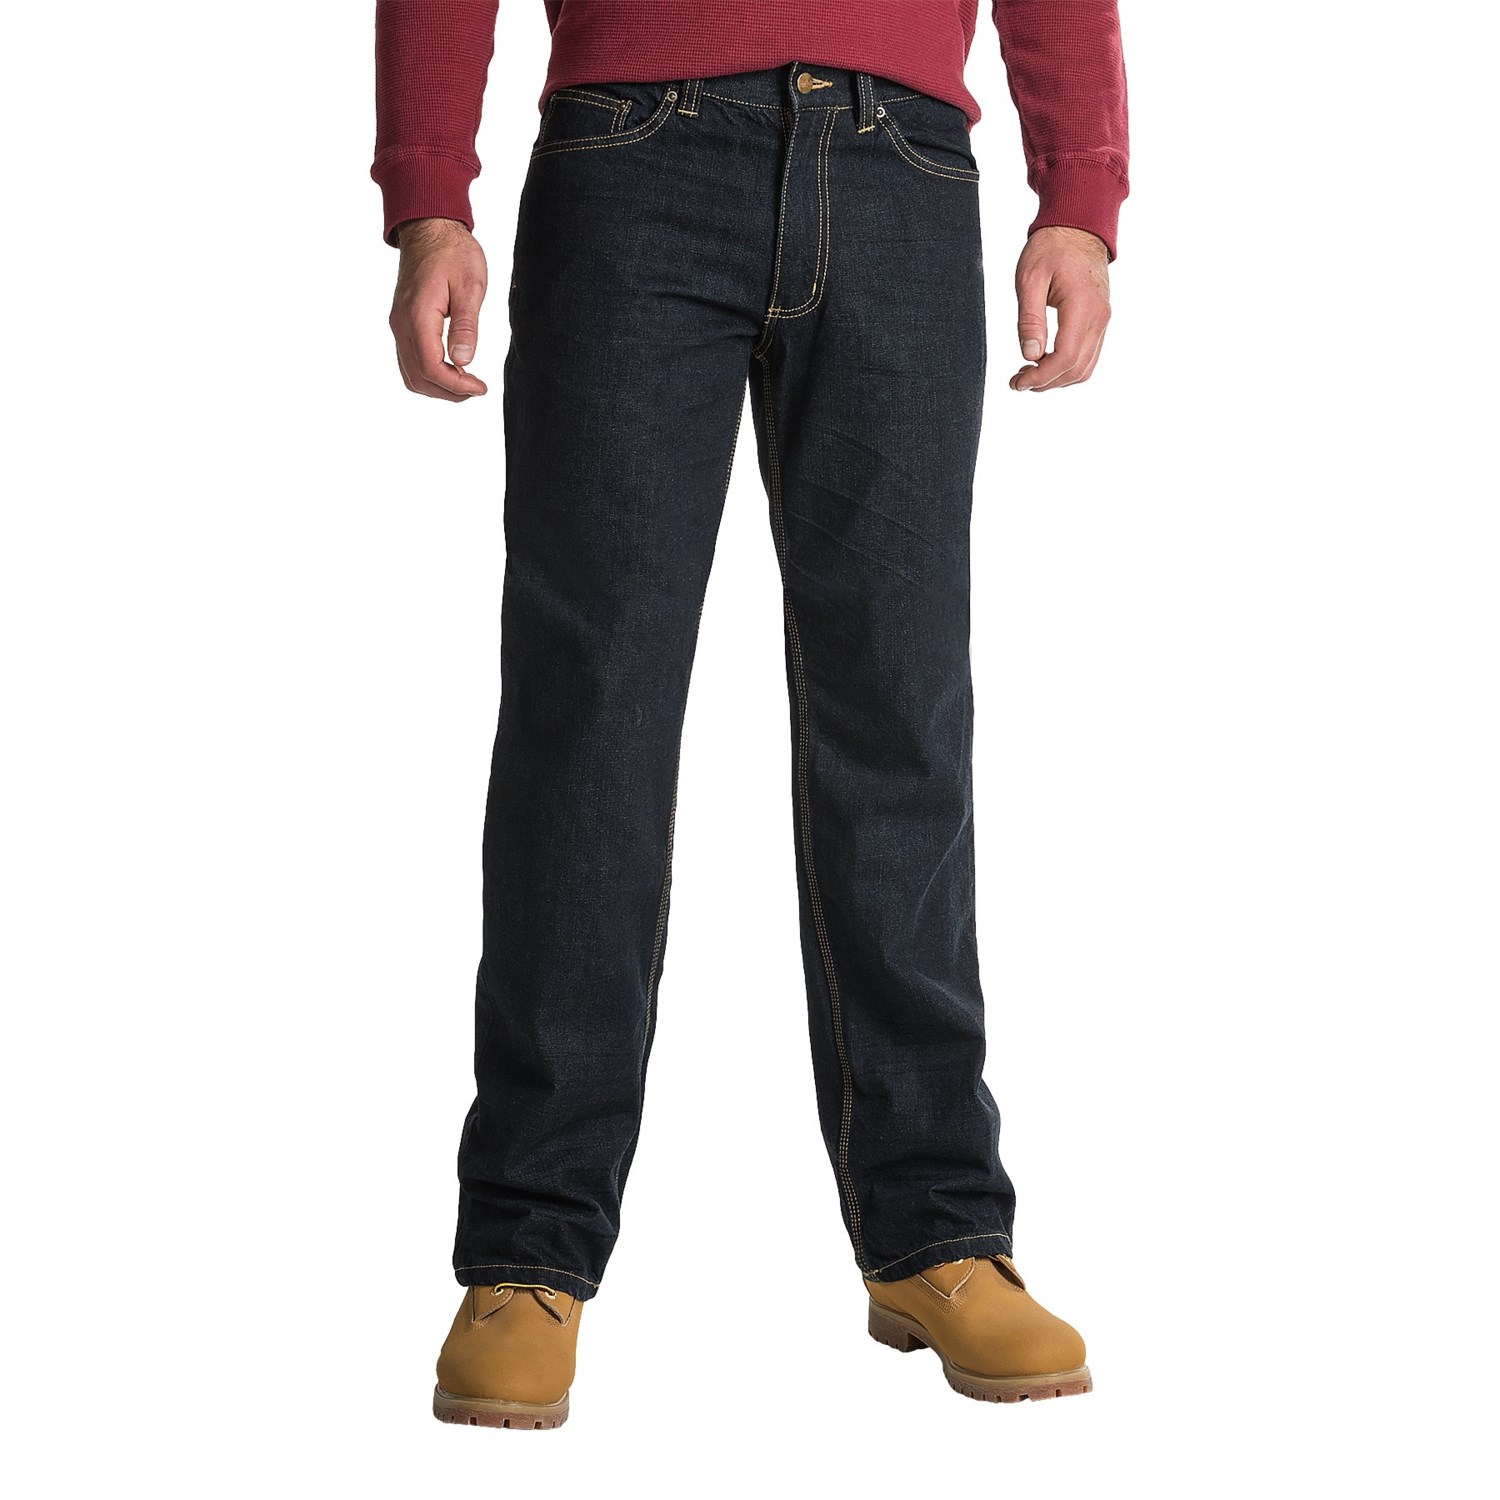 Carhartt 101019 Series 1889 Loose Fit Jeans (For Men)